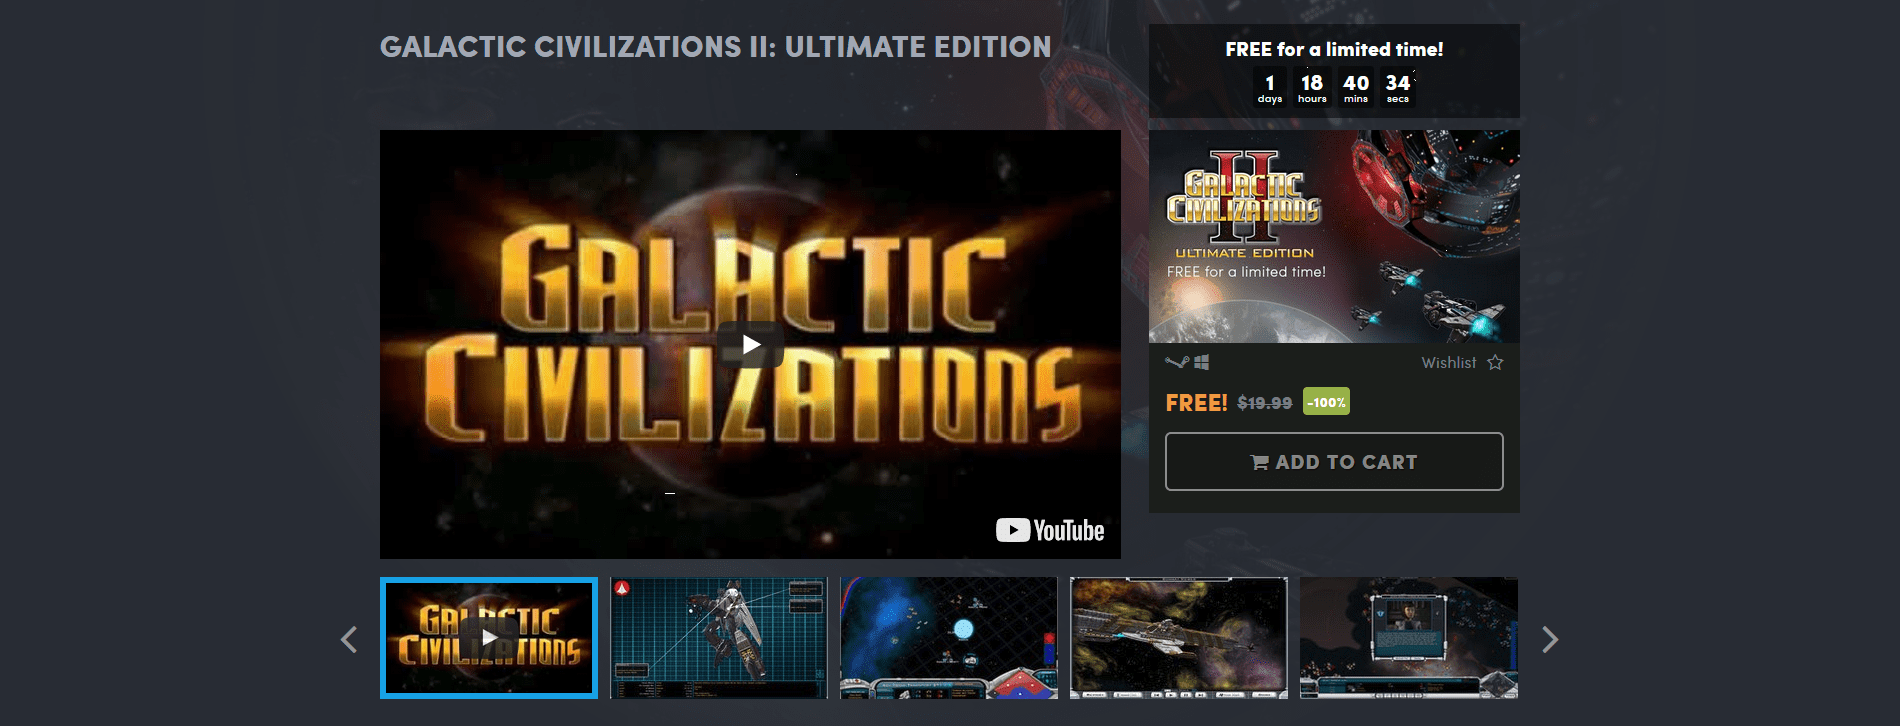 Galactic Civilizations II: Ultimate Edition is Free on Humble Bundle